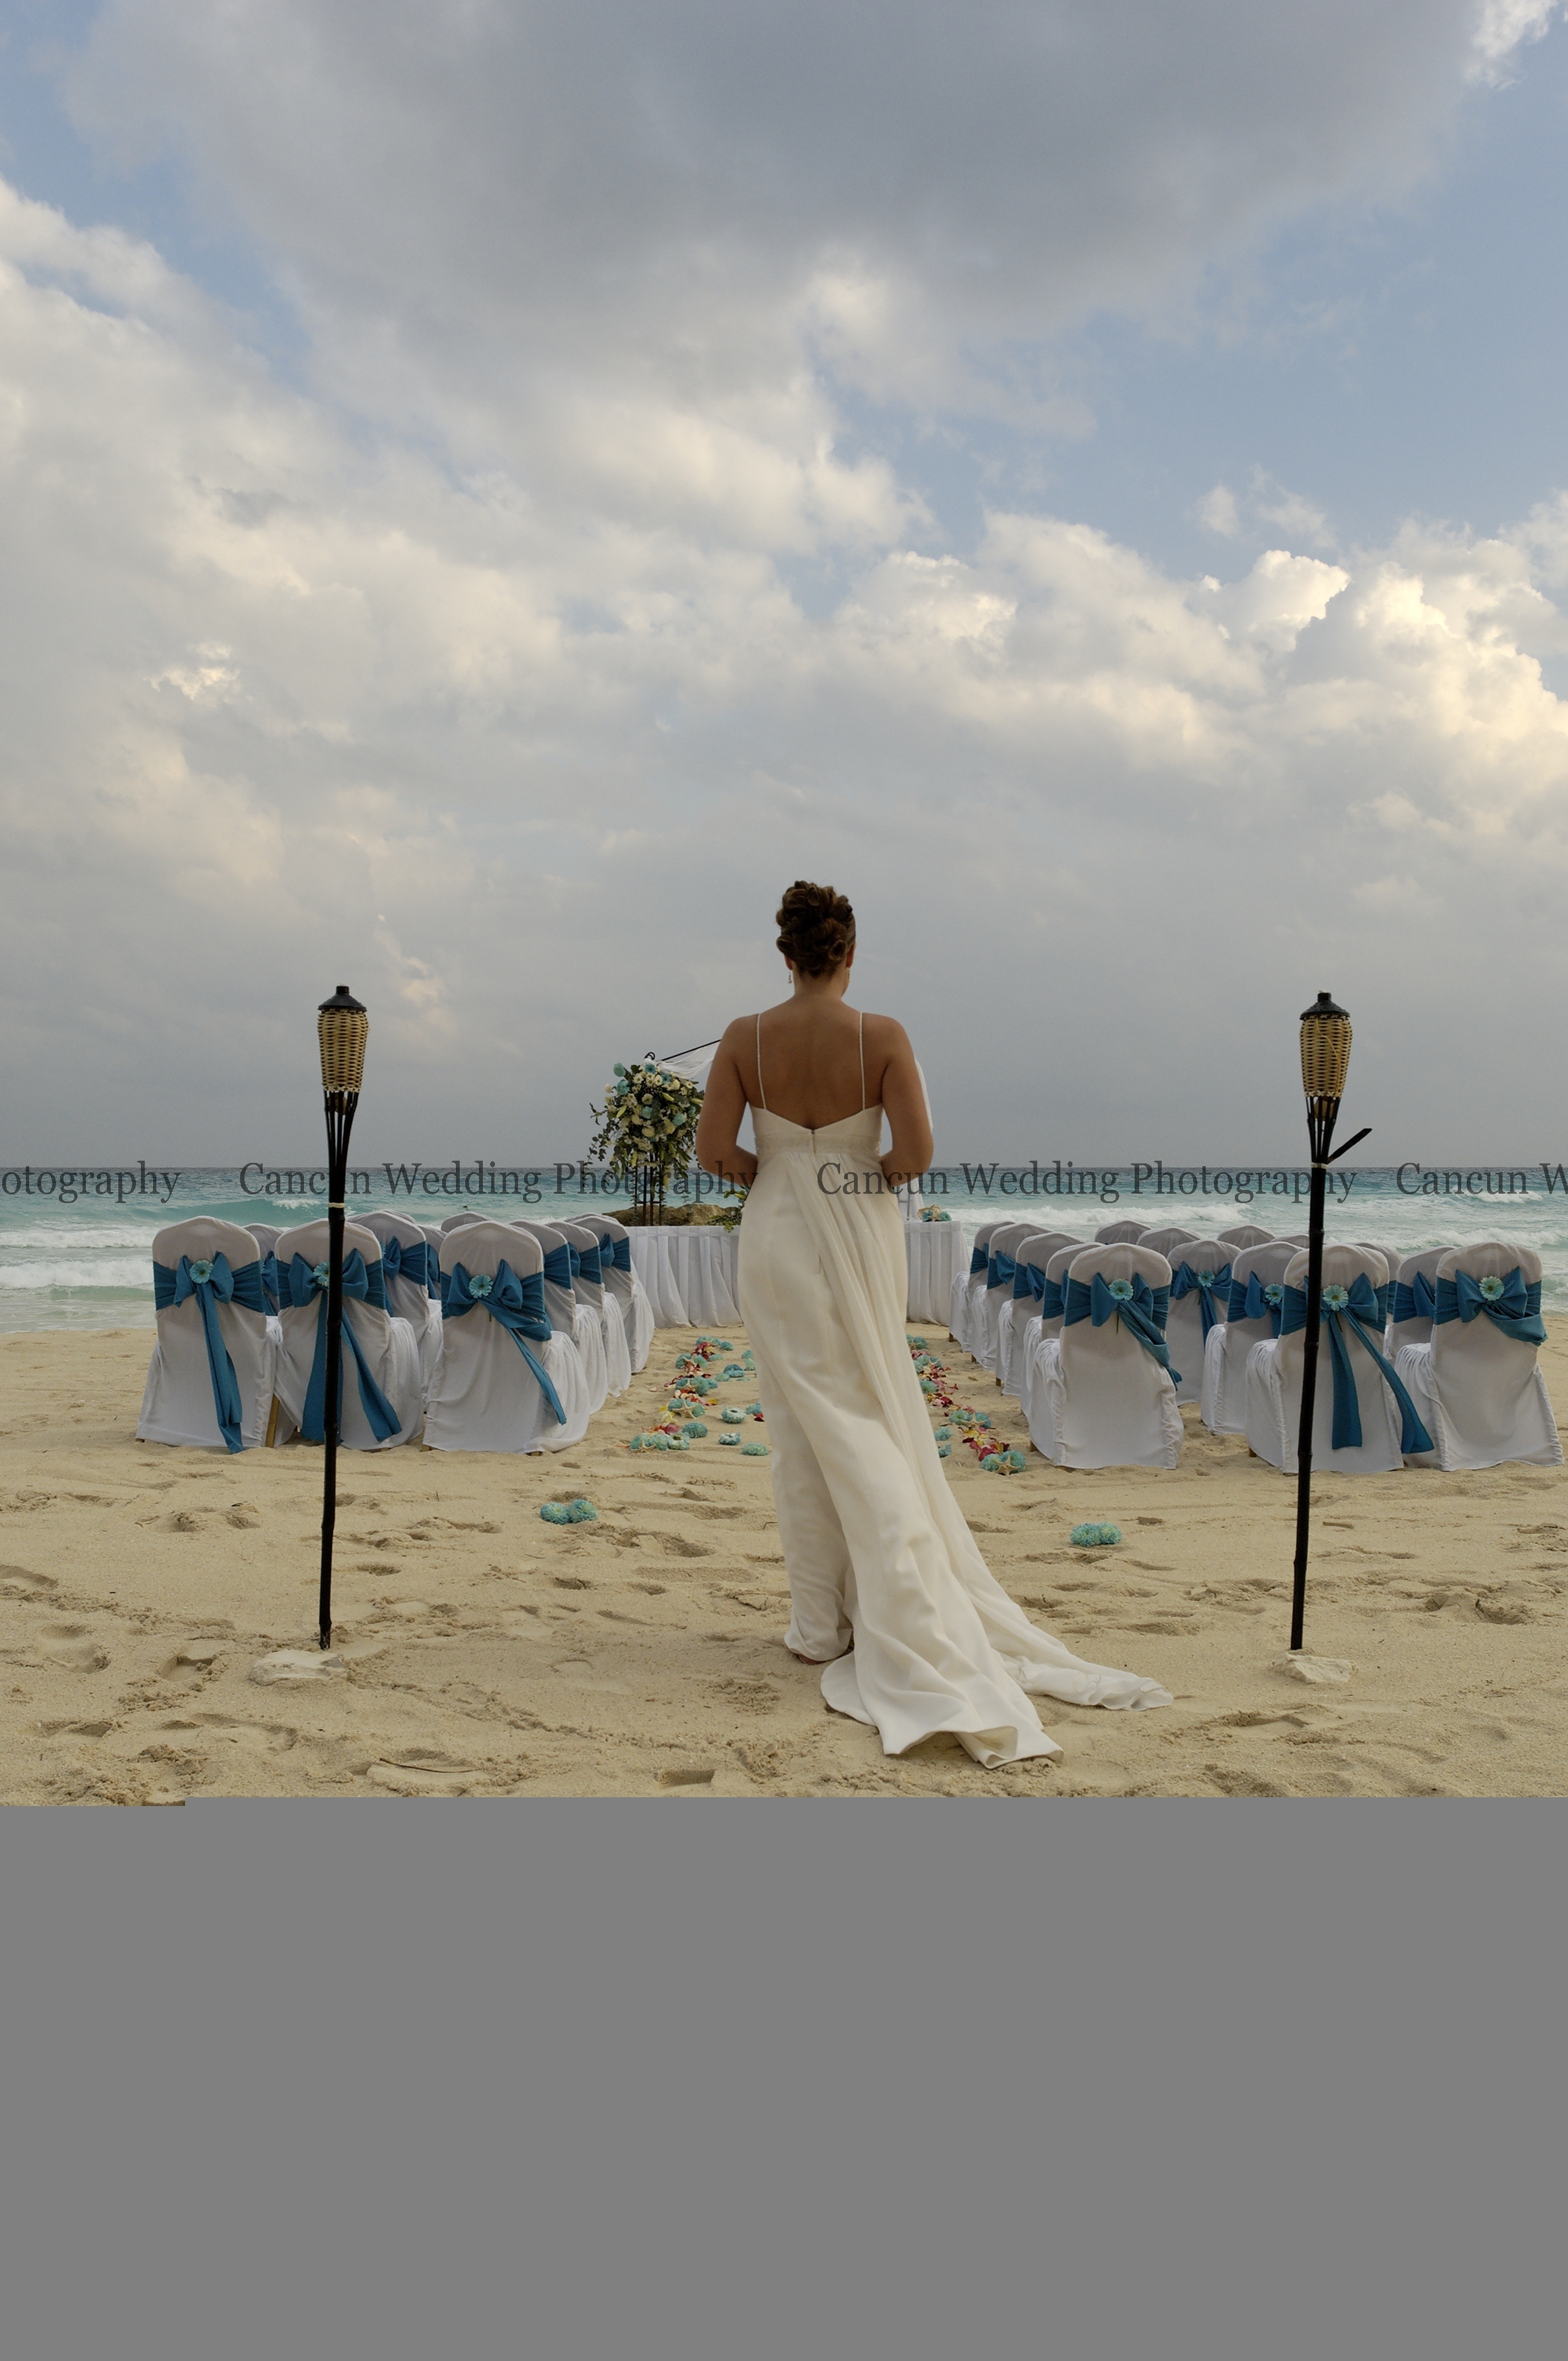 Sunset Lagoon Beach Wedding Ceremony Set Up